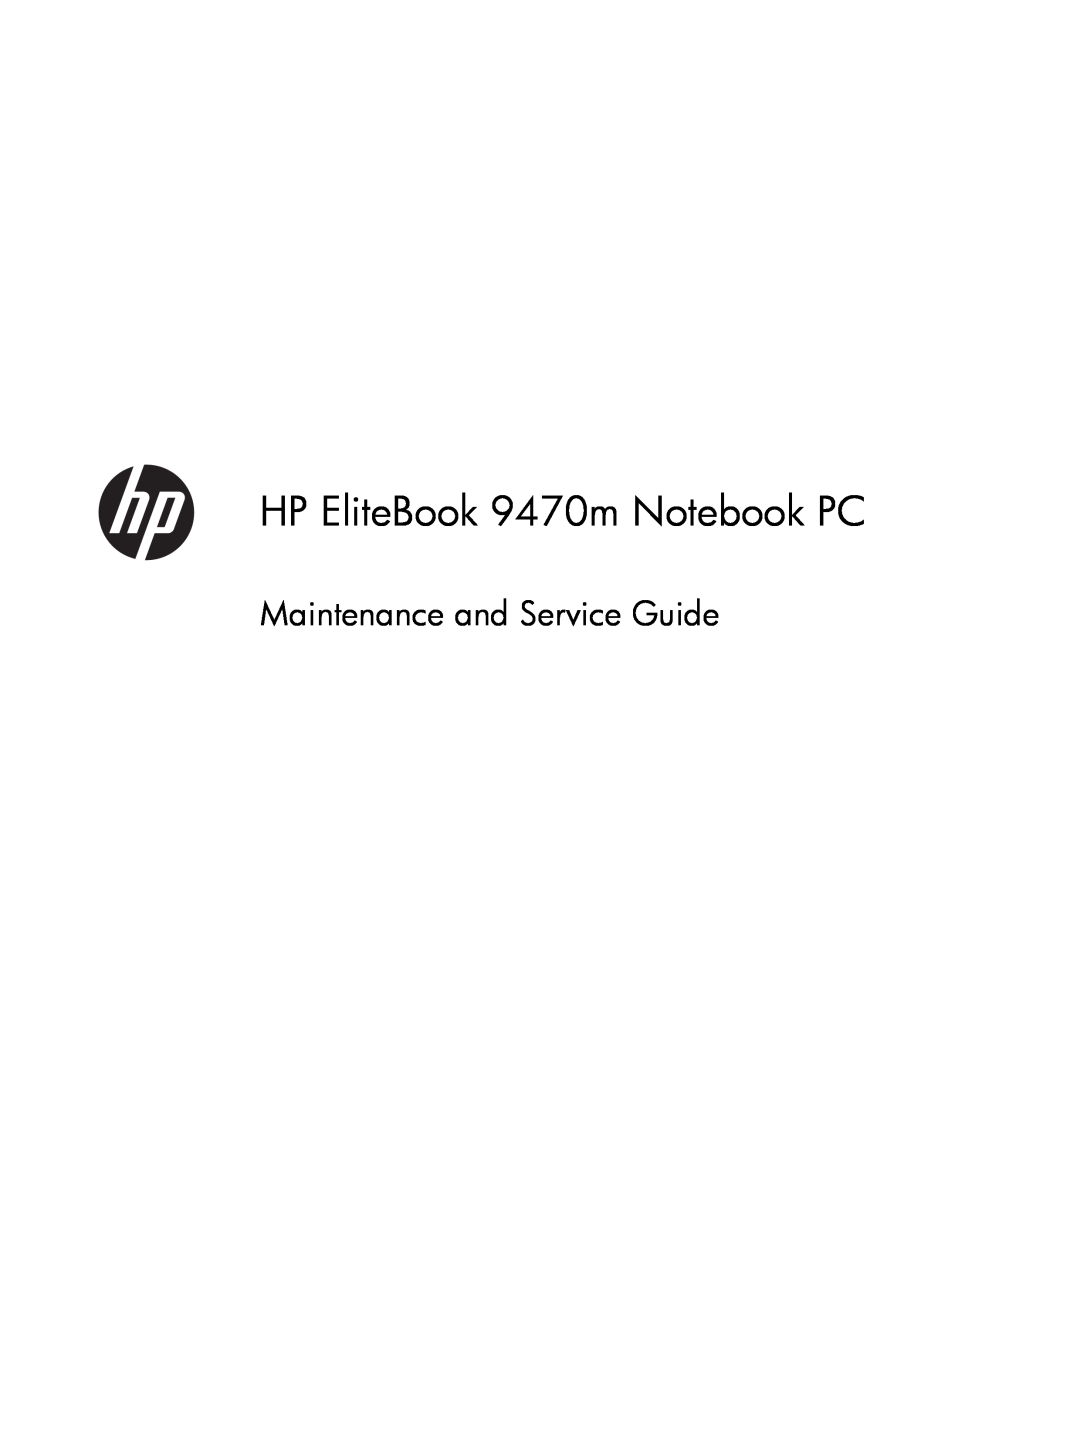 HP 9470m i7 Win8 D3K33UT#ABA manual HP EliteBook 9470m Notebook PC, Maintenance and Service Guide 